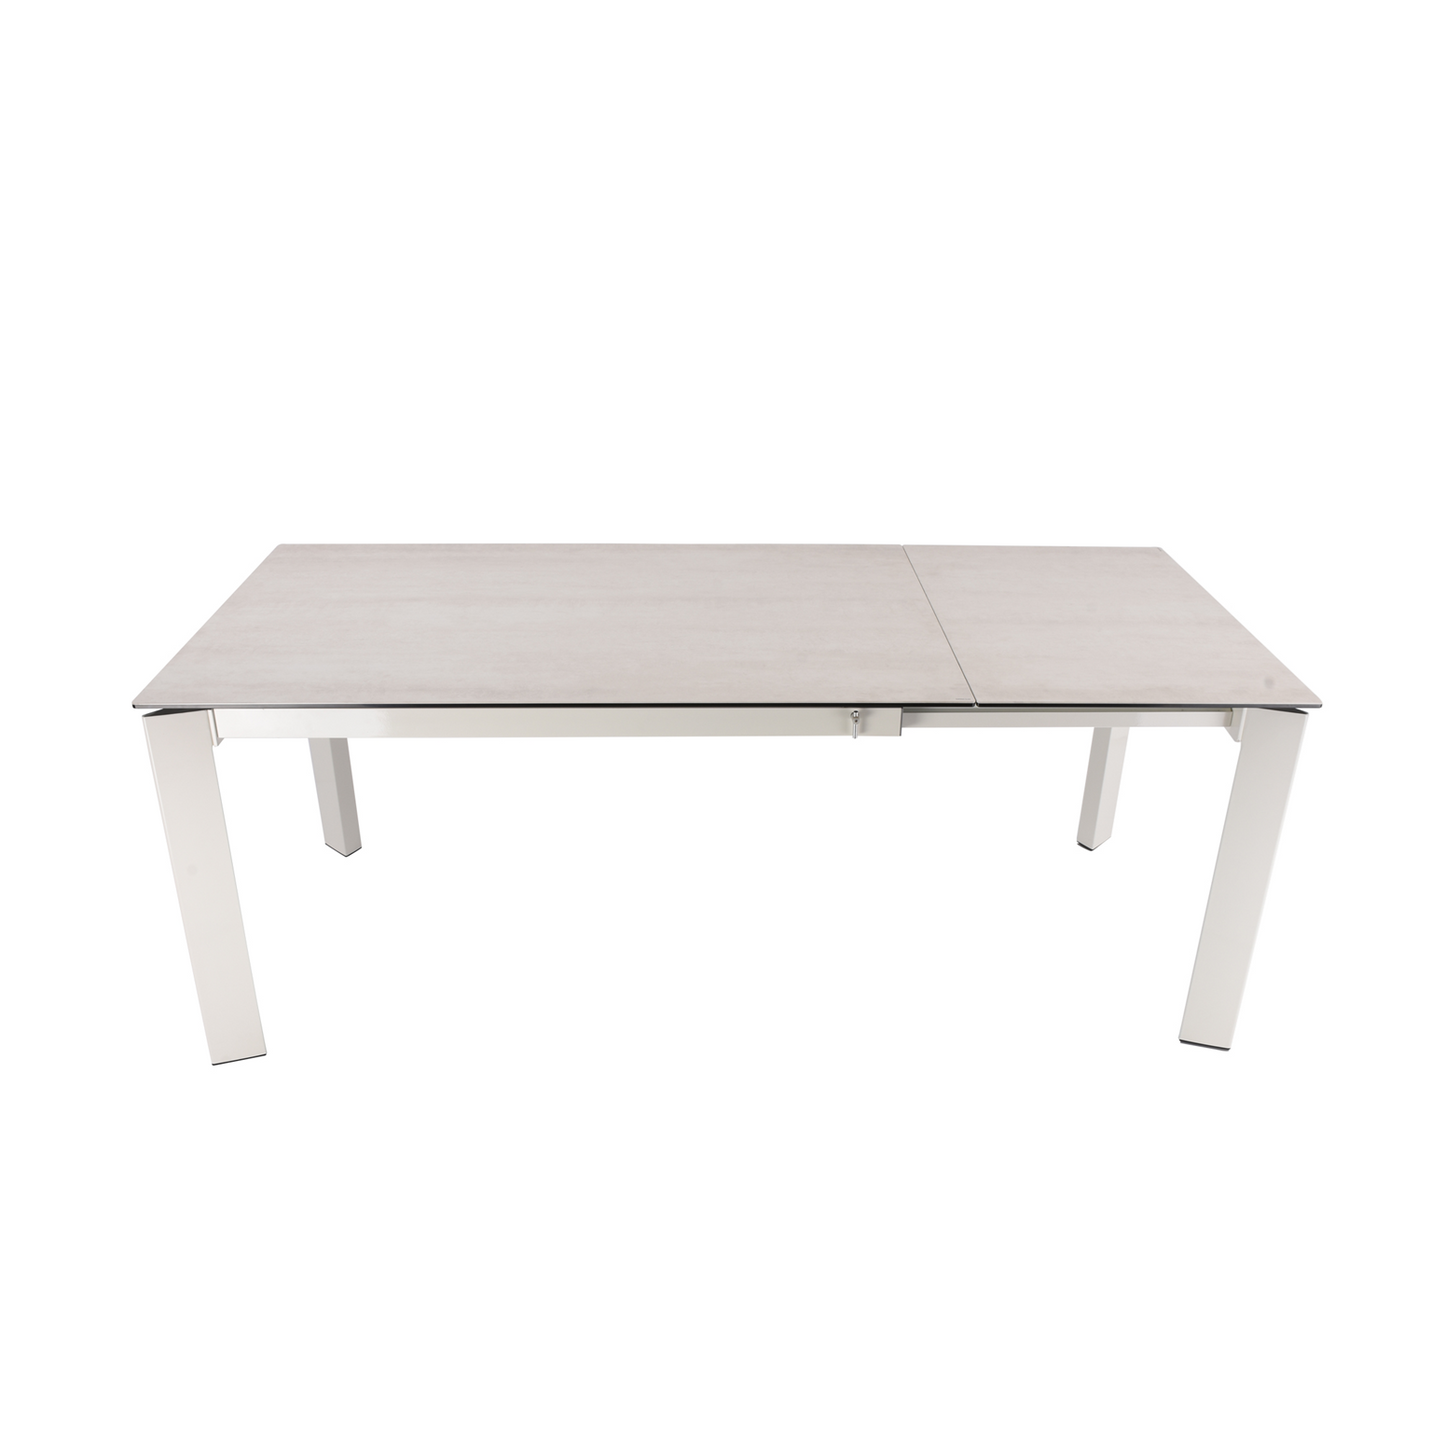 MONICA Extendable Table